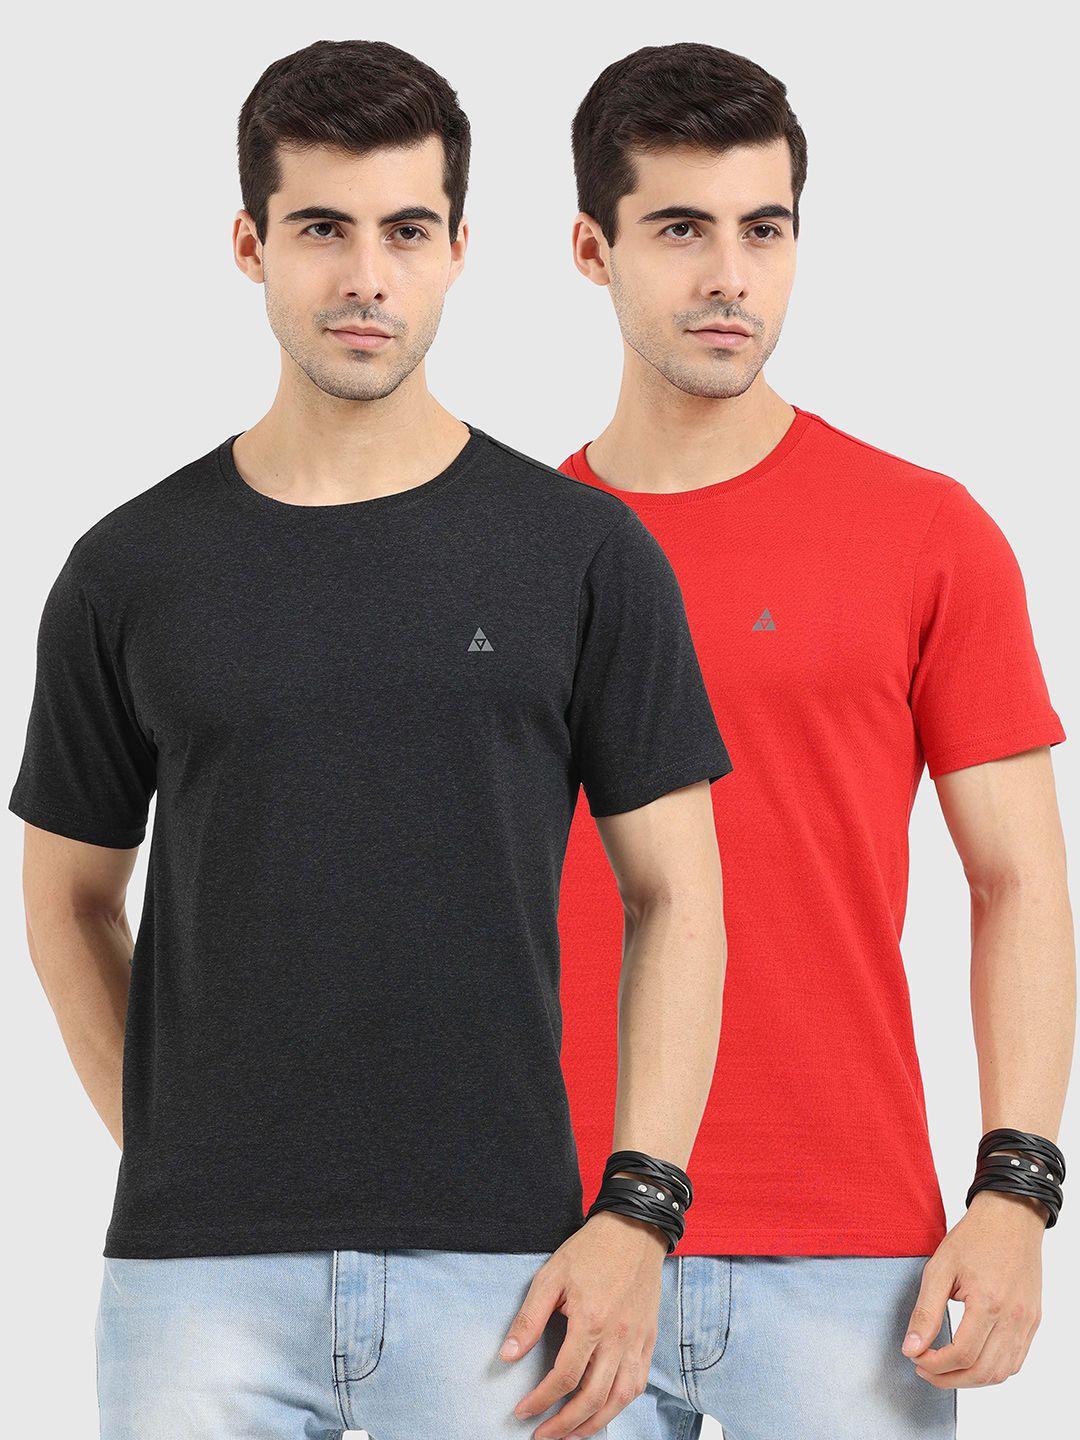 ardeur men multicoloured 2 t-shirt